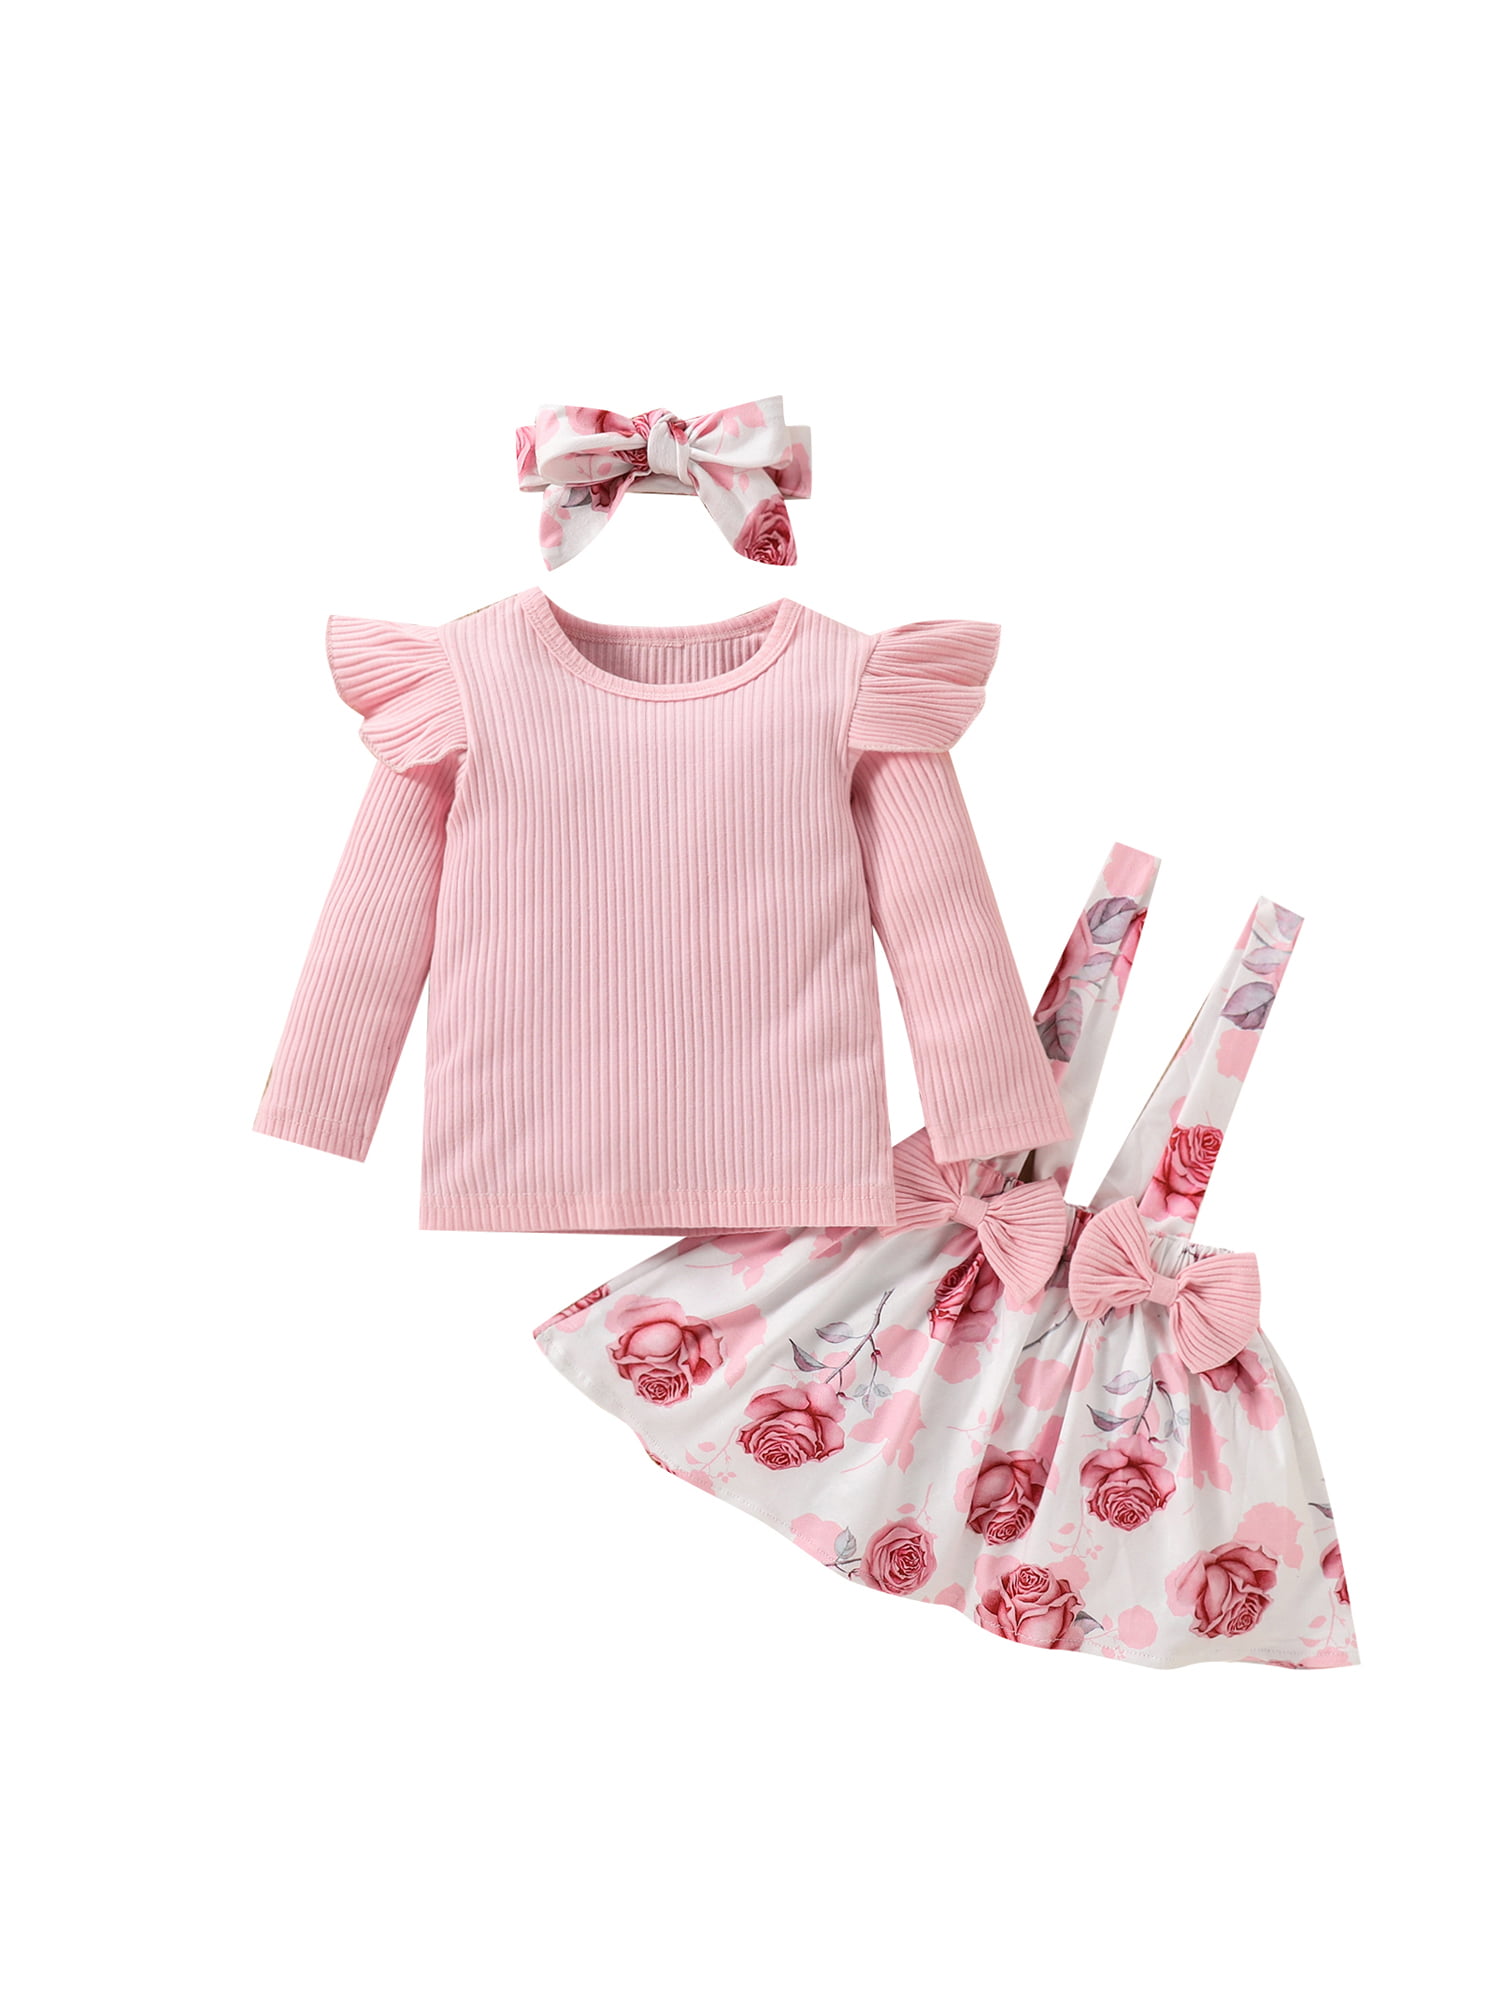 Details about   3pcs Kids Baby Girls Winter/Fall Fashion Dress Outfits Coat+Bag Princess Dresses 